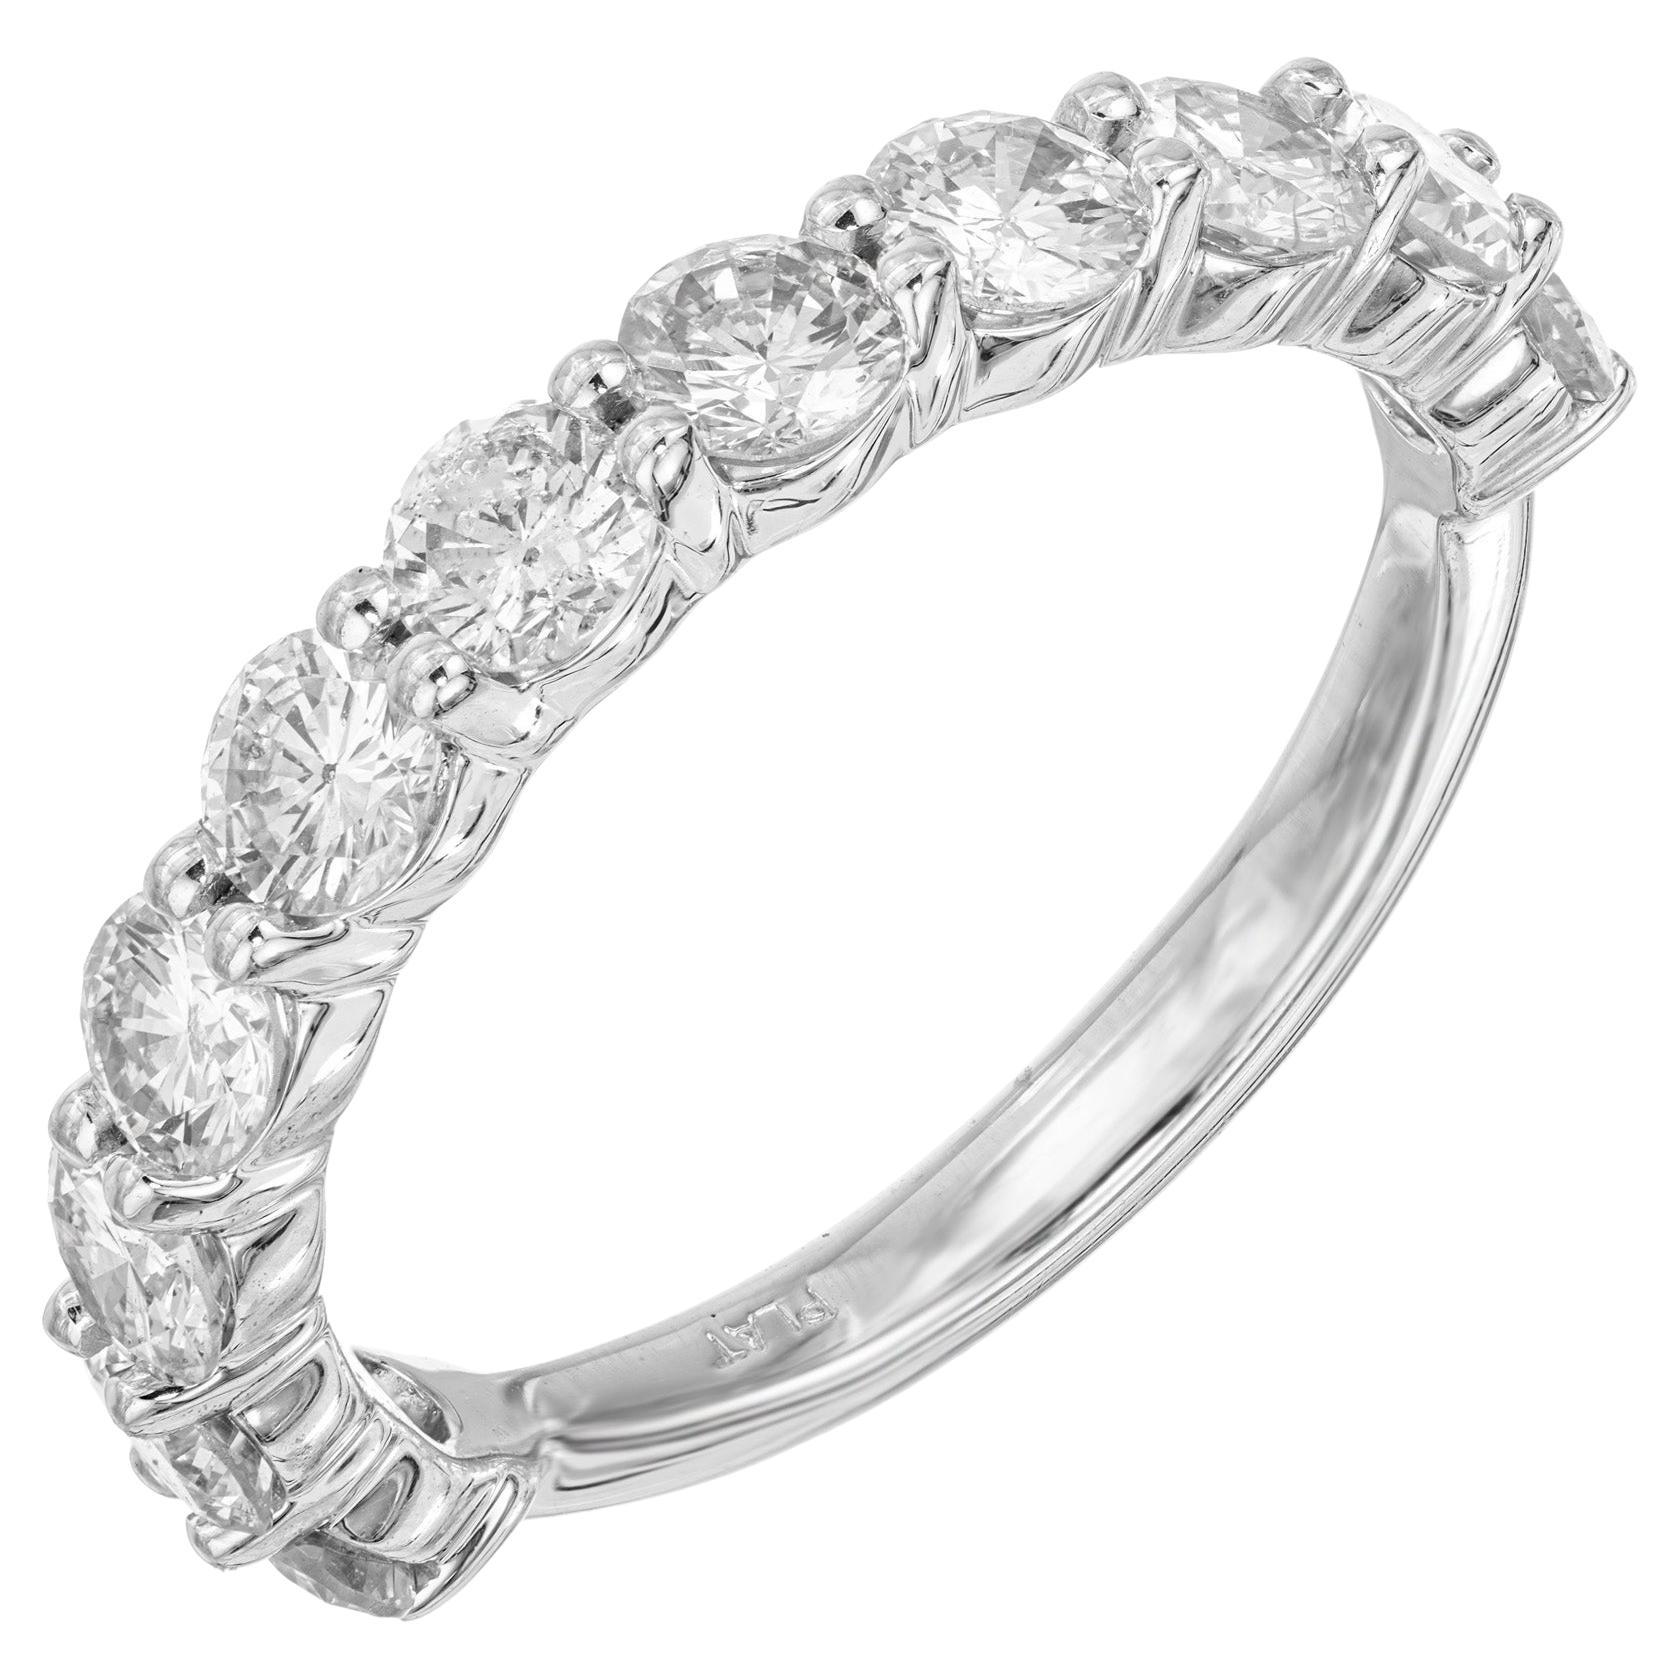 Peter Suchy 1.67 Carat Round Diamond Platinum Wedding Band Ring For Sale